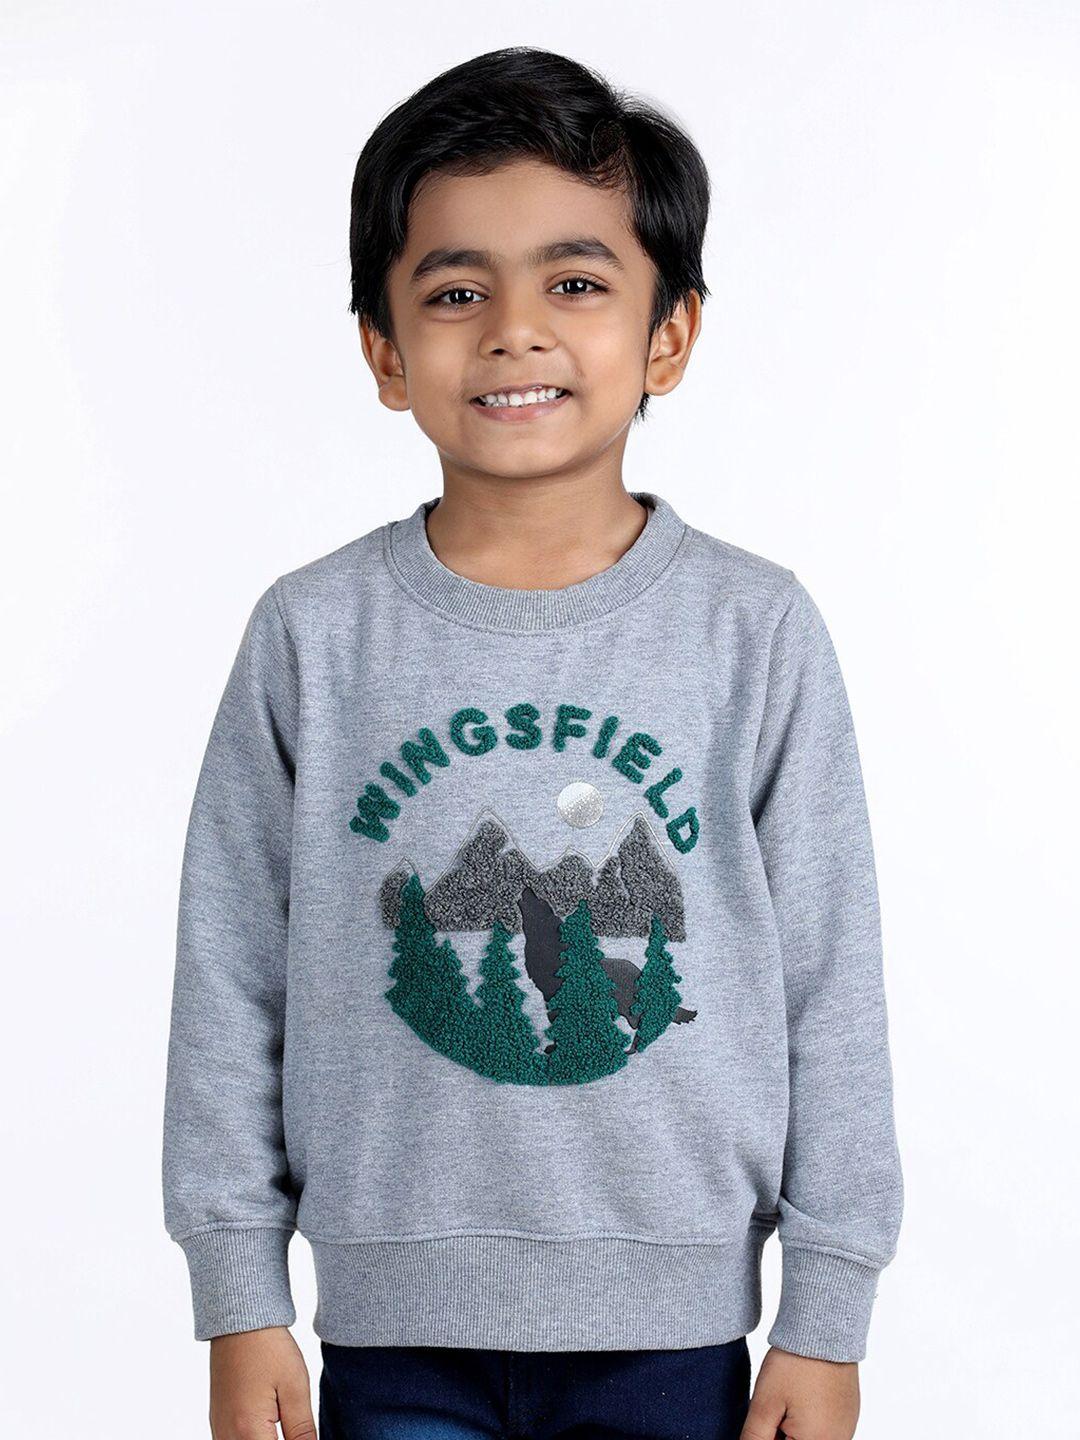 wingsfield boys typography self design fleece sweatshirt